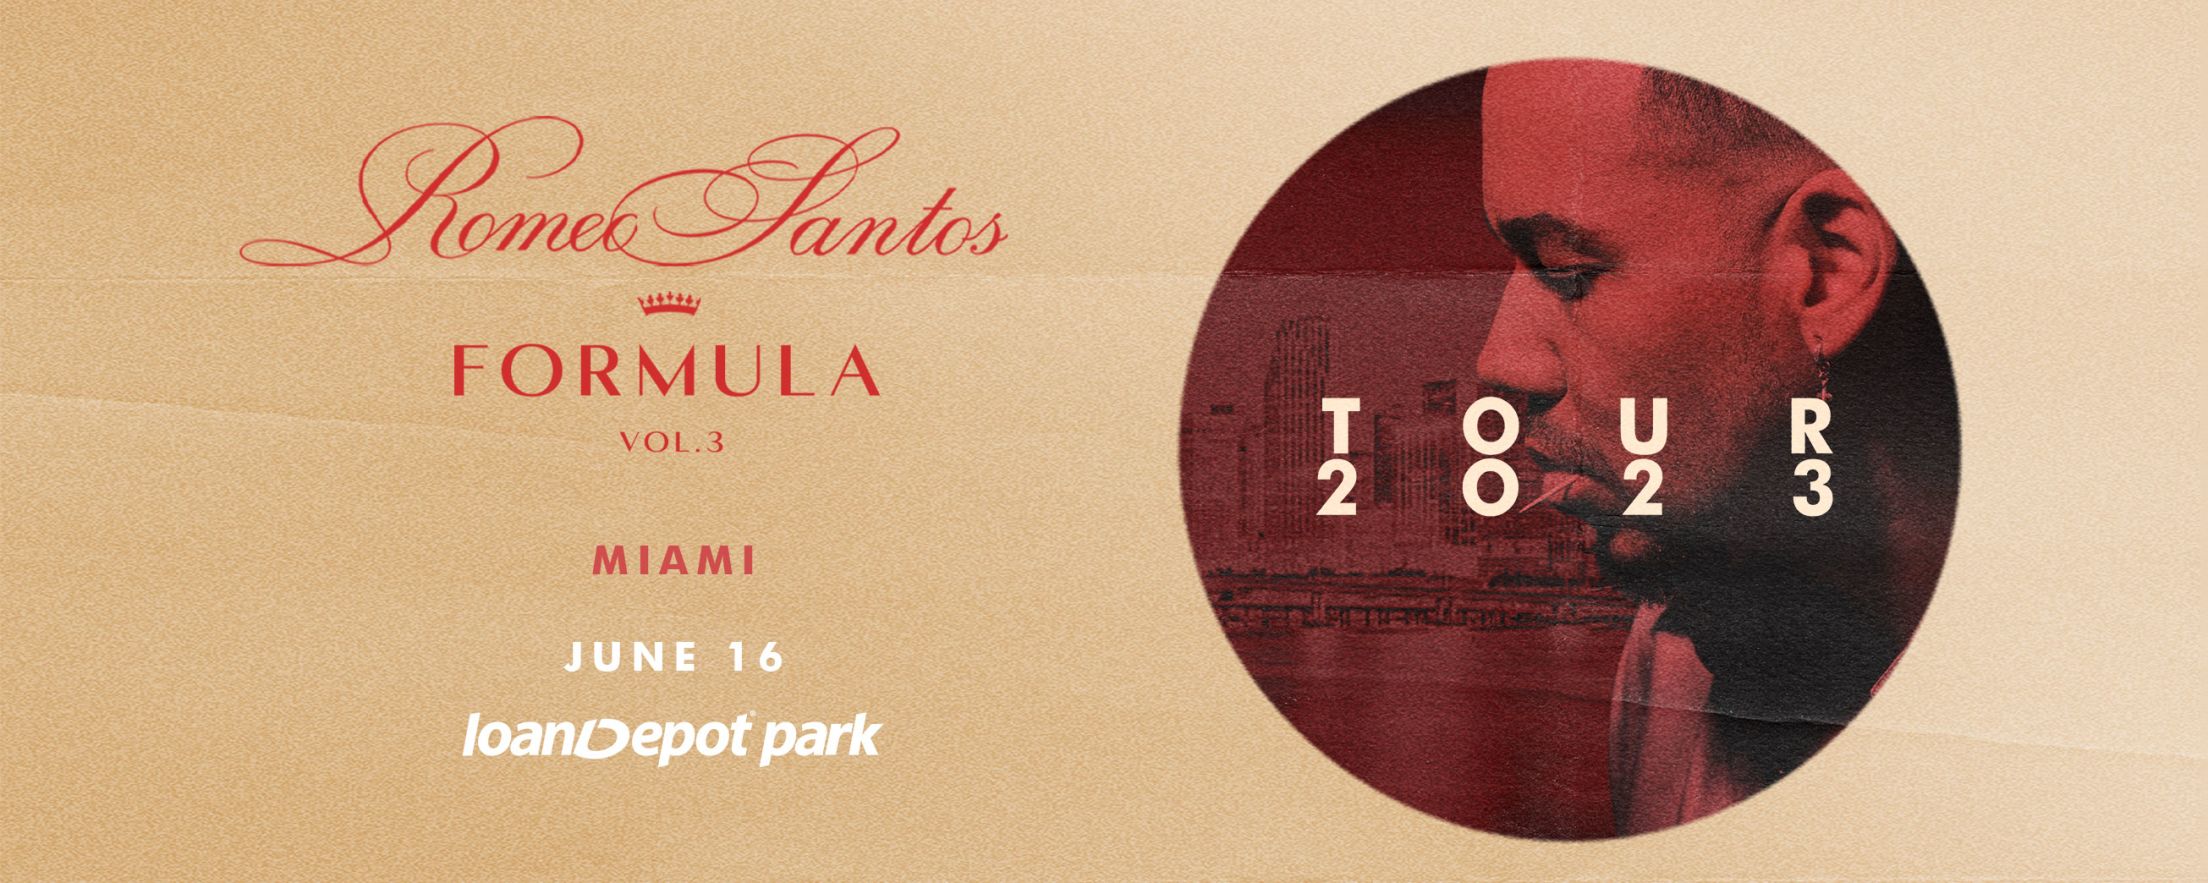 Romeo Santos Formula Vol. 3 Tour Miami Marlins